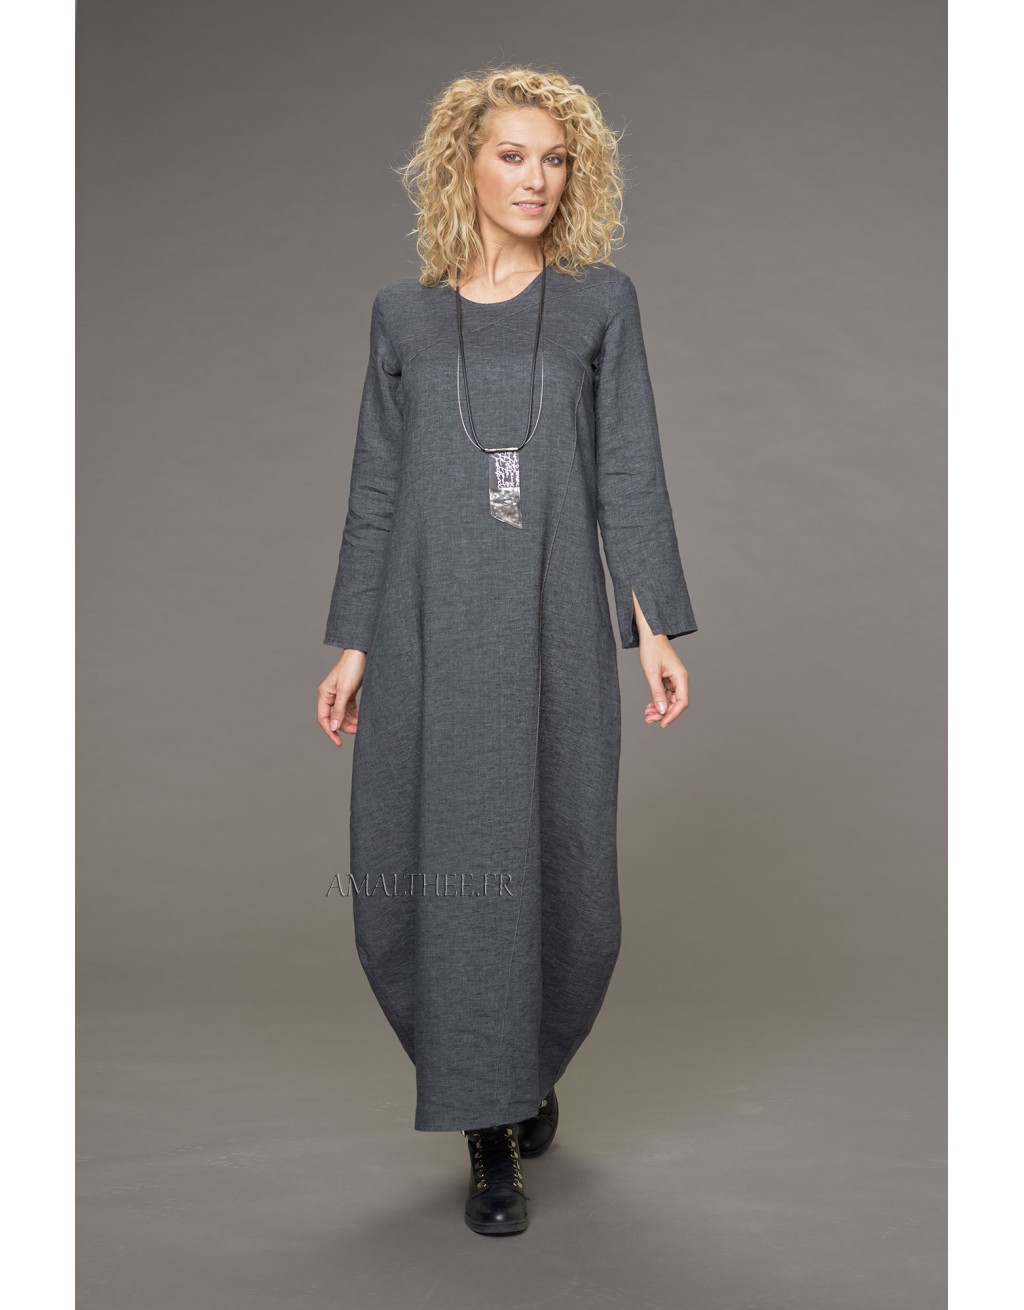 Manon Long Linen Dress with visible seams